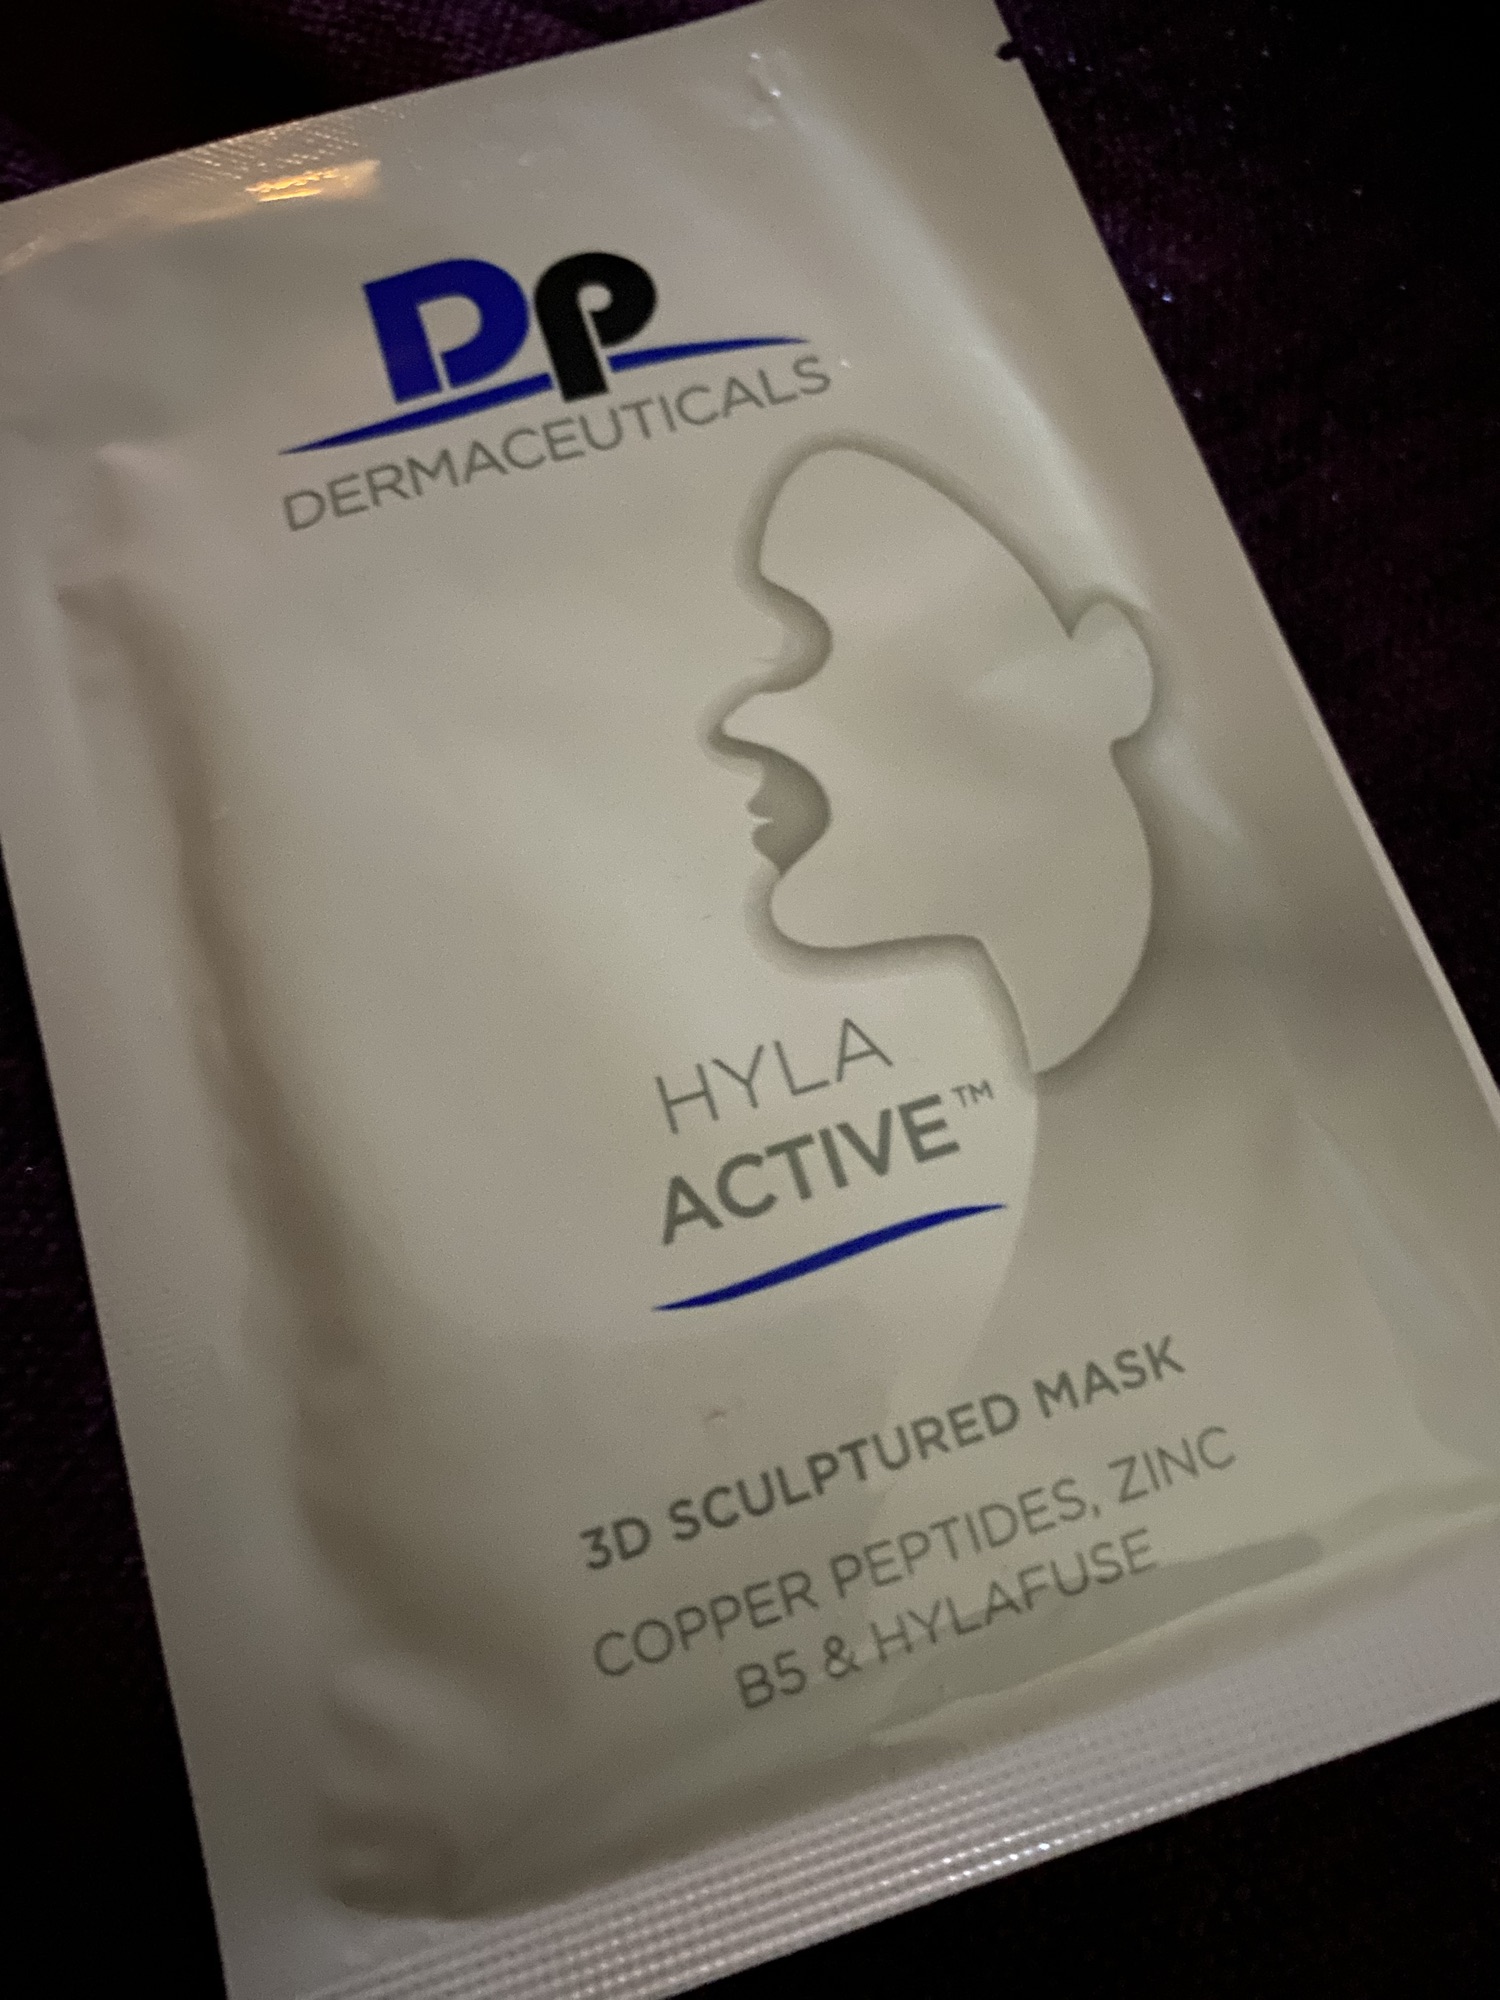 Dermapen Hyla Active 3d sculptured mask